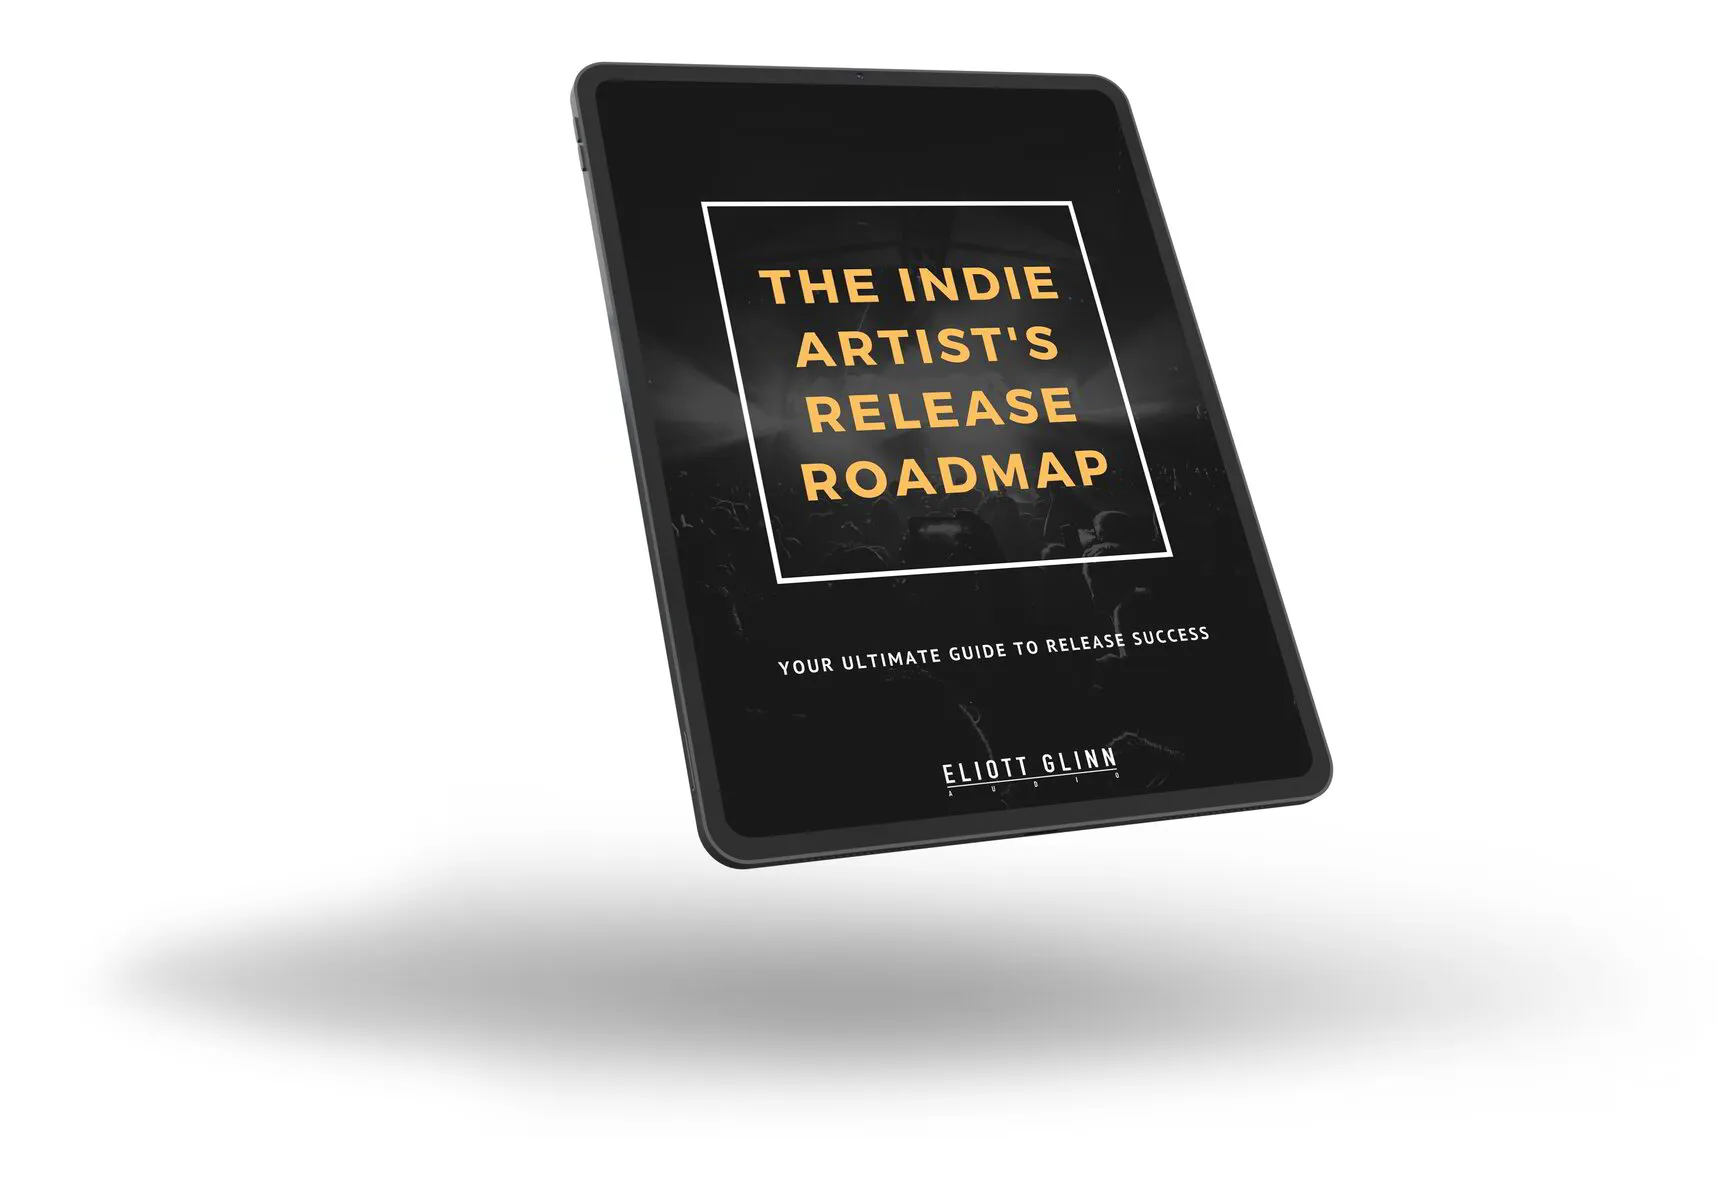 The Indie Artist's Release Roadmap